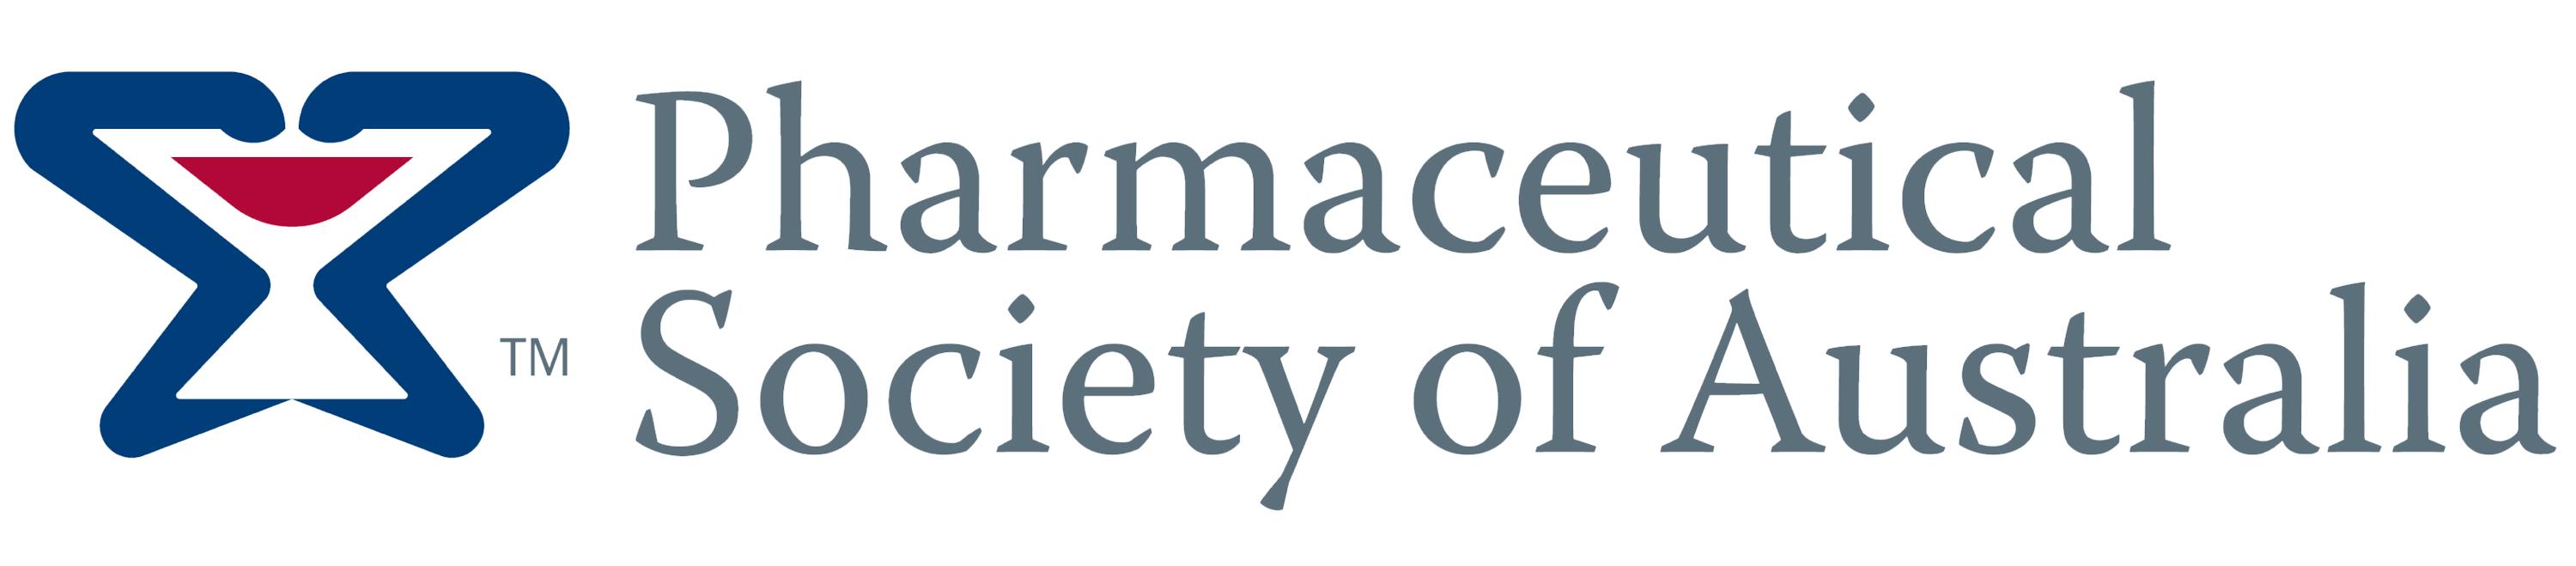 Pharmaceutical Society Of Australia